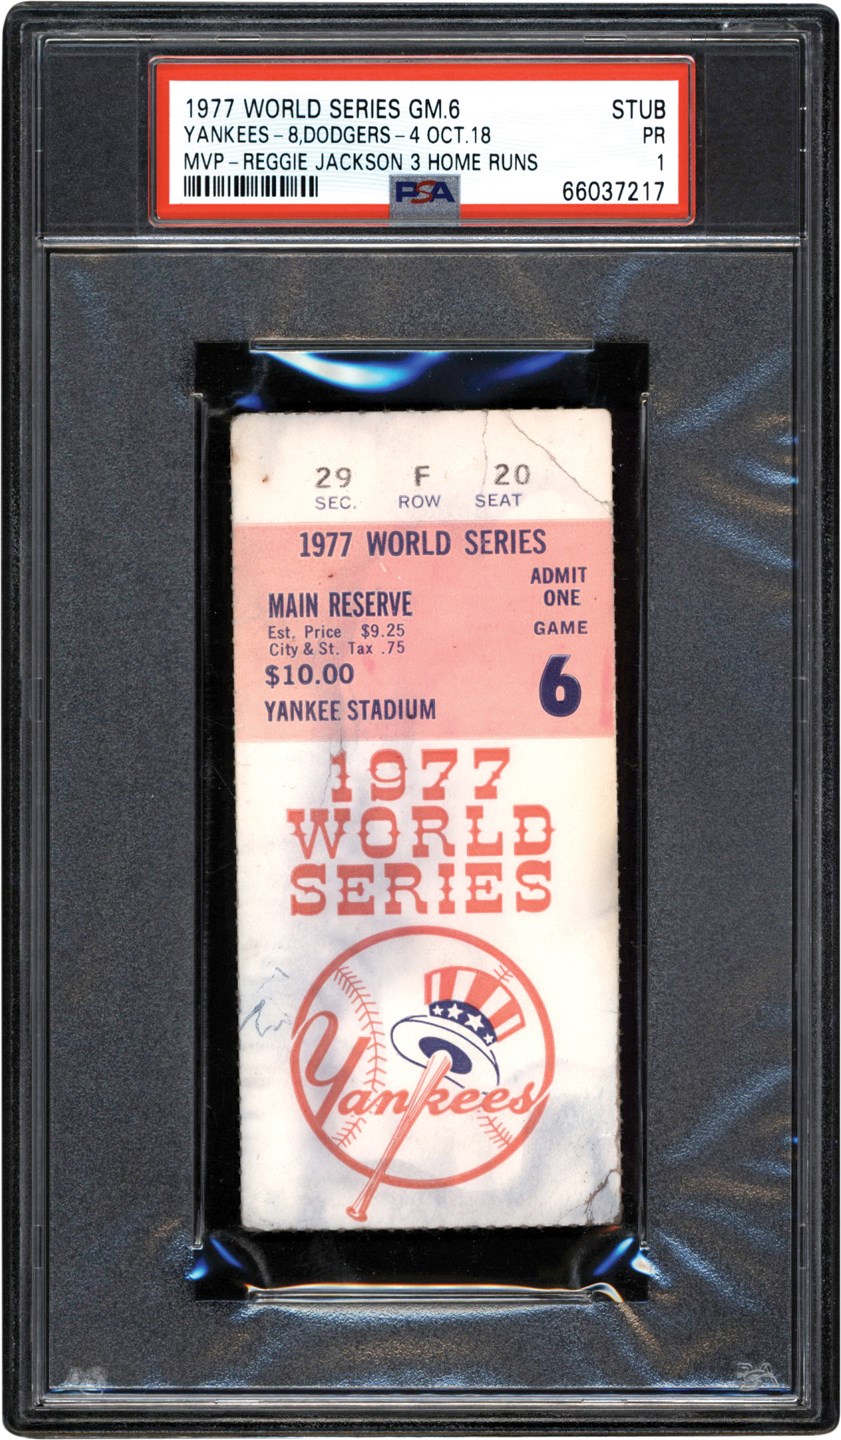 - 1977 Reggie Jackson 3-Home Run 1977 World Series Ticket Stub PSA PR 1